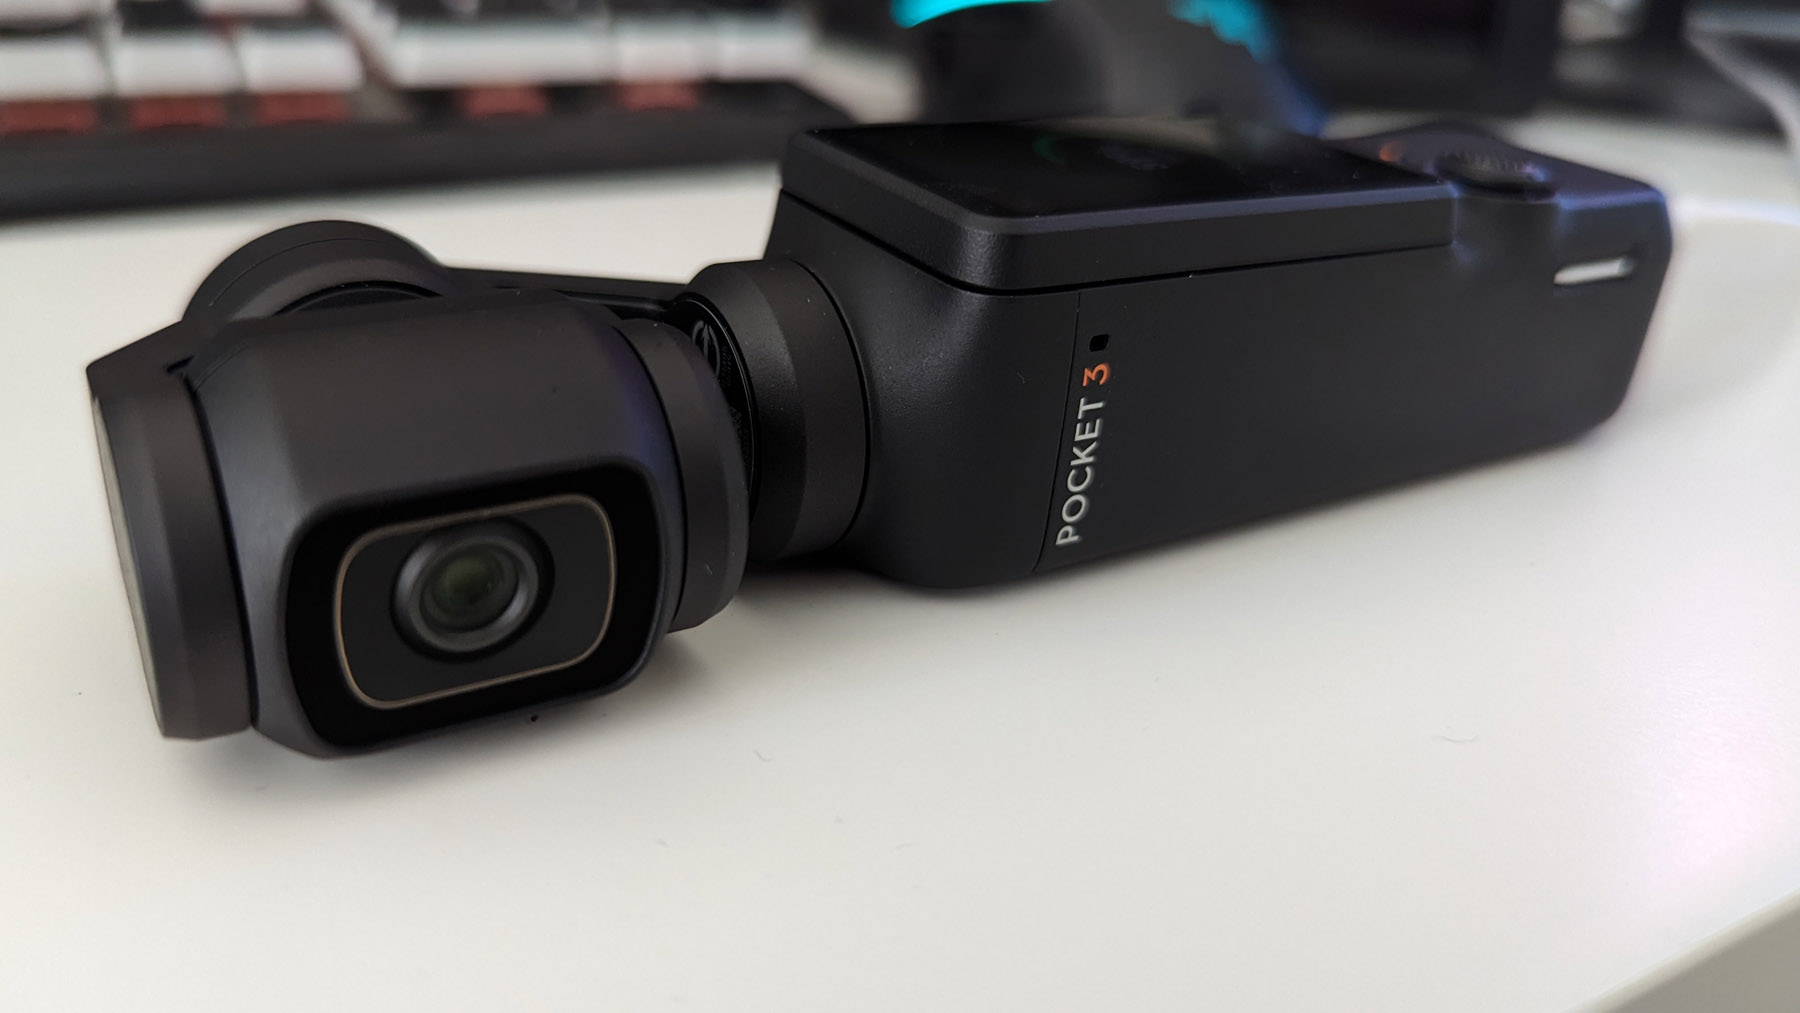 Bilan : DJI OSMO Pocket 3 Creator Combo volera des parts de marché aux caméras d’action